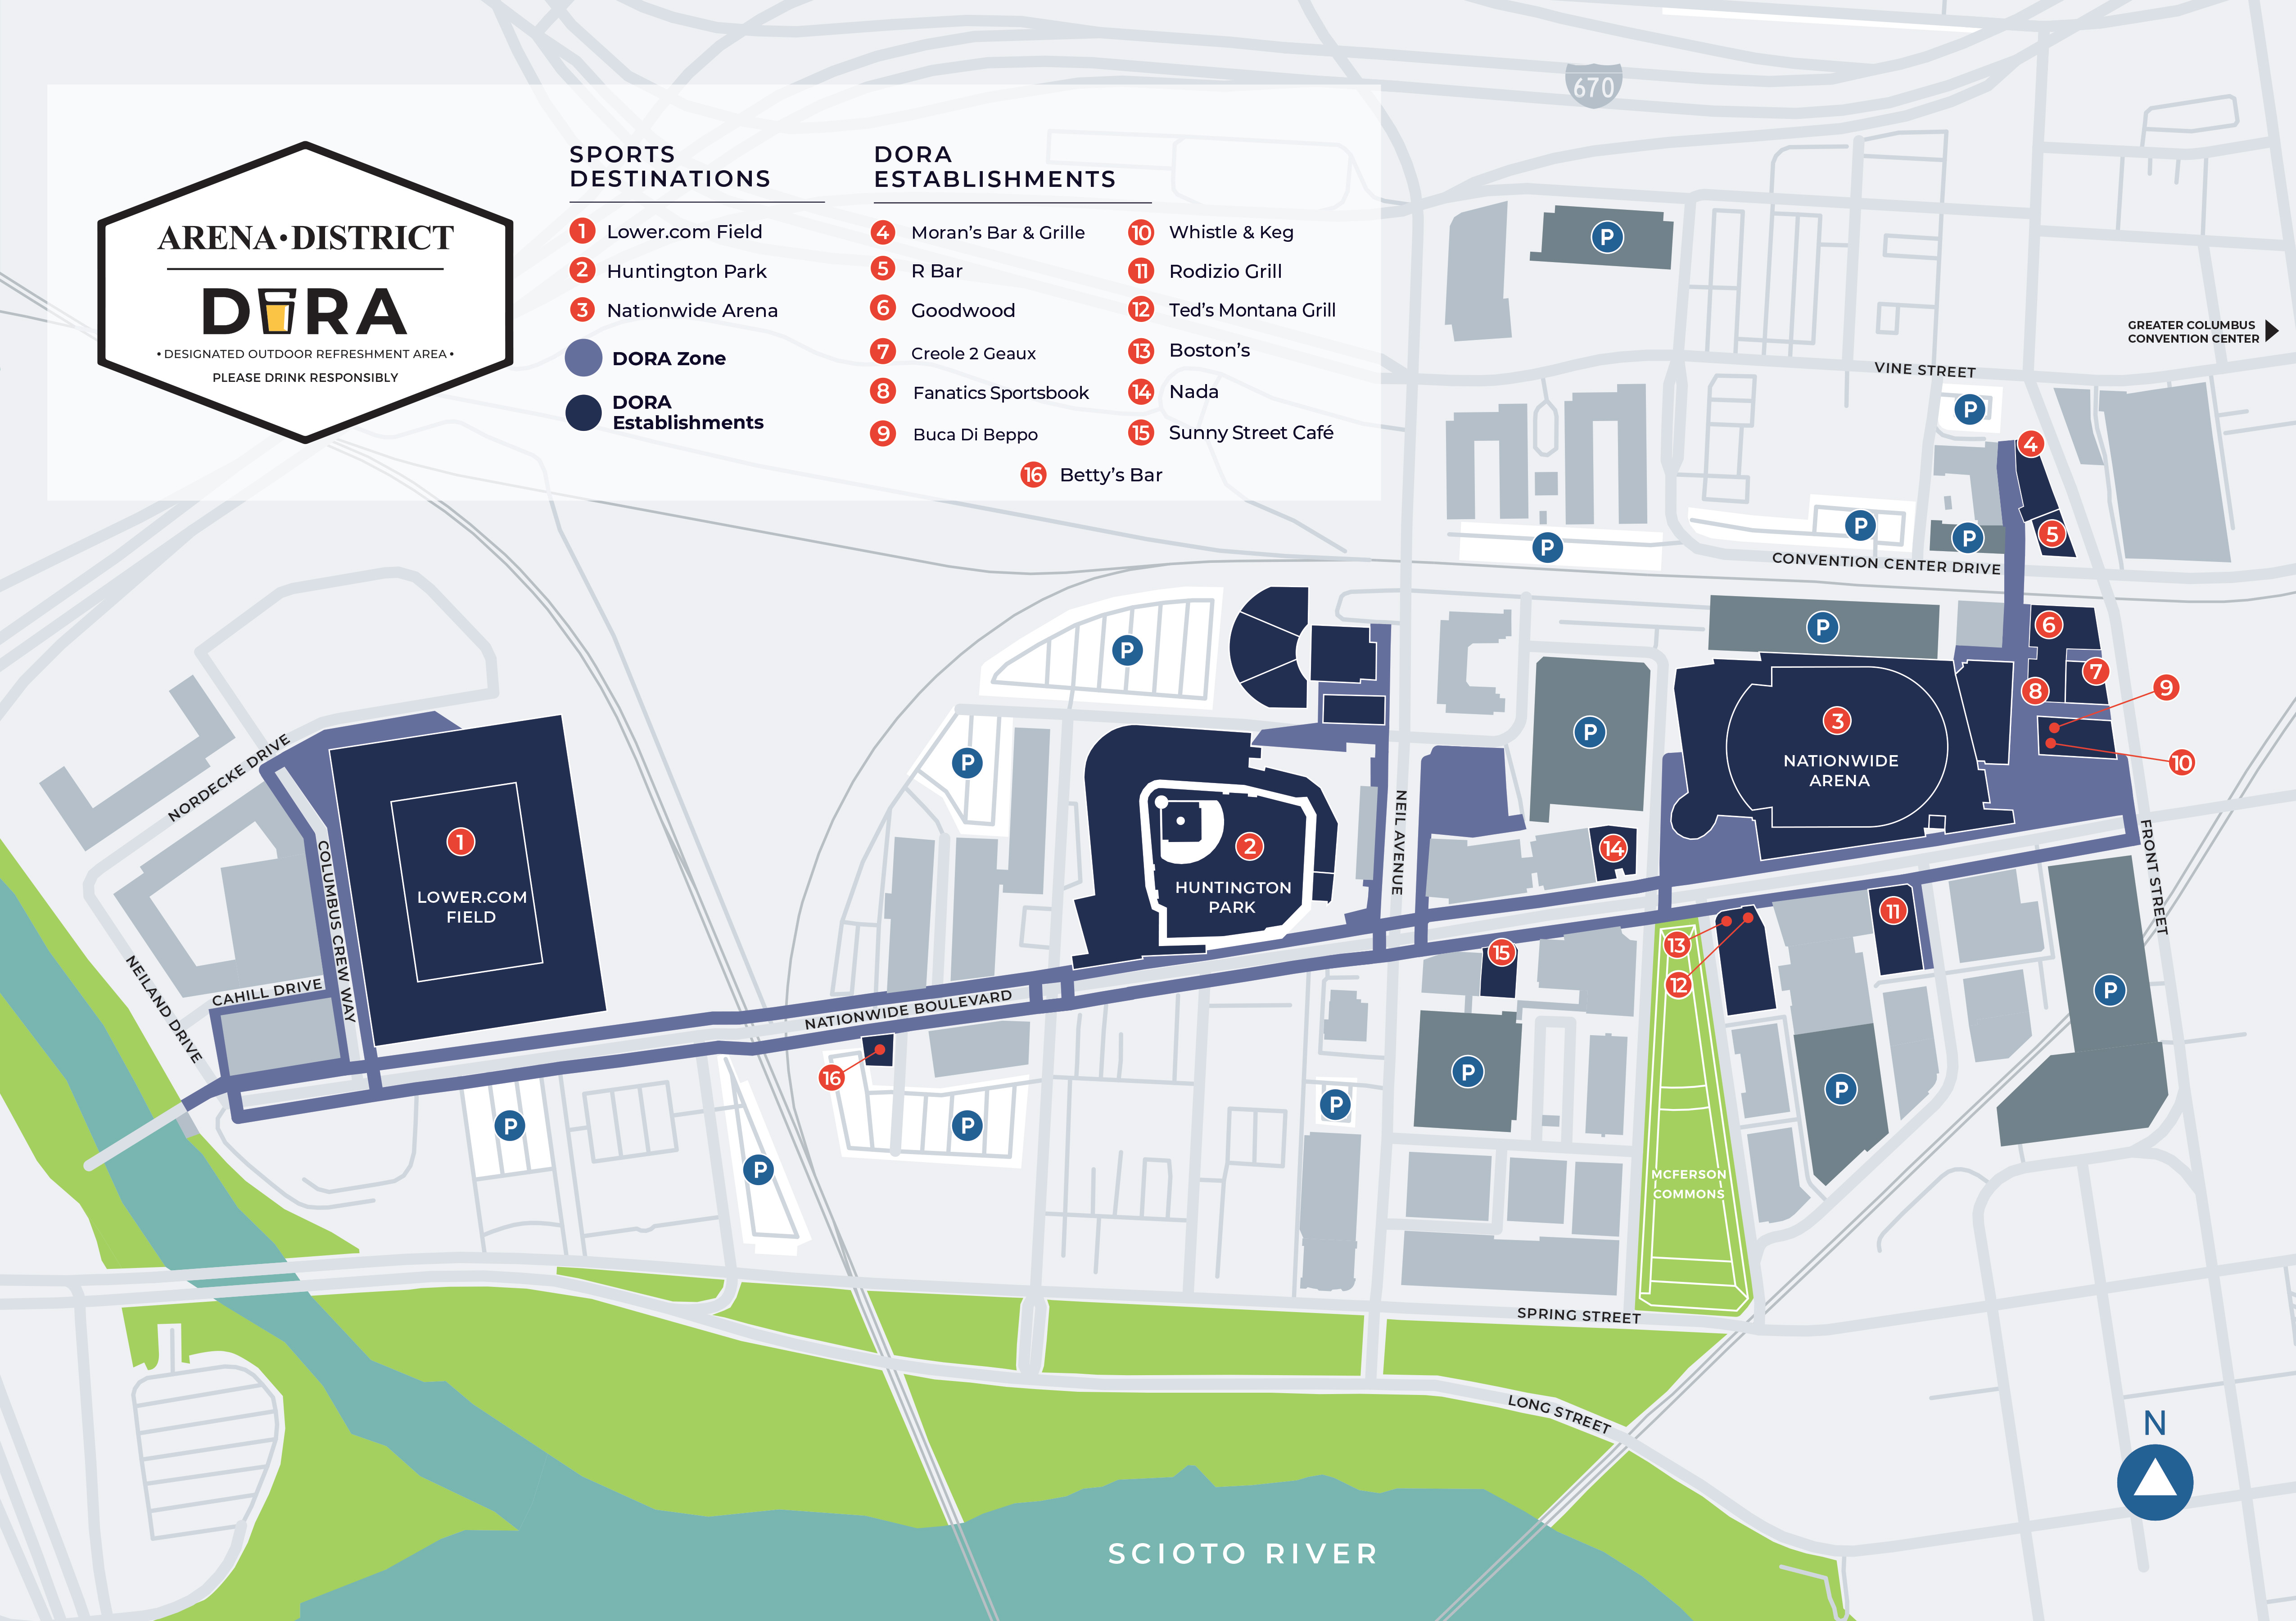 Arena District DORA Map